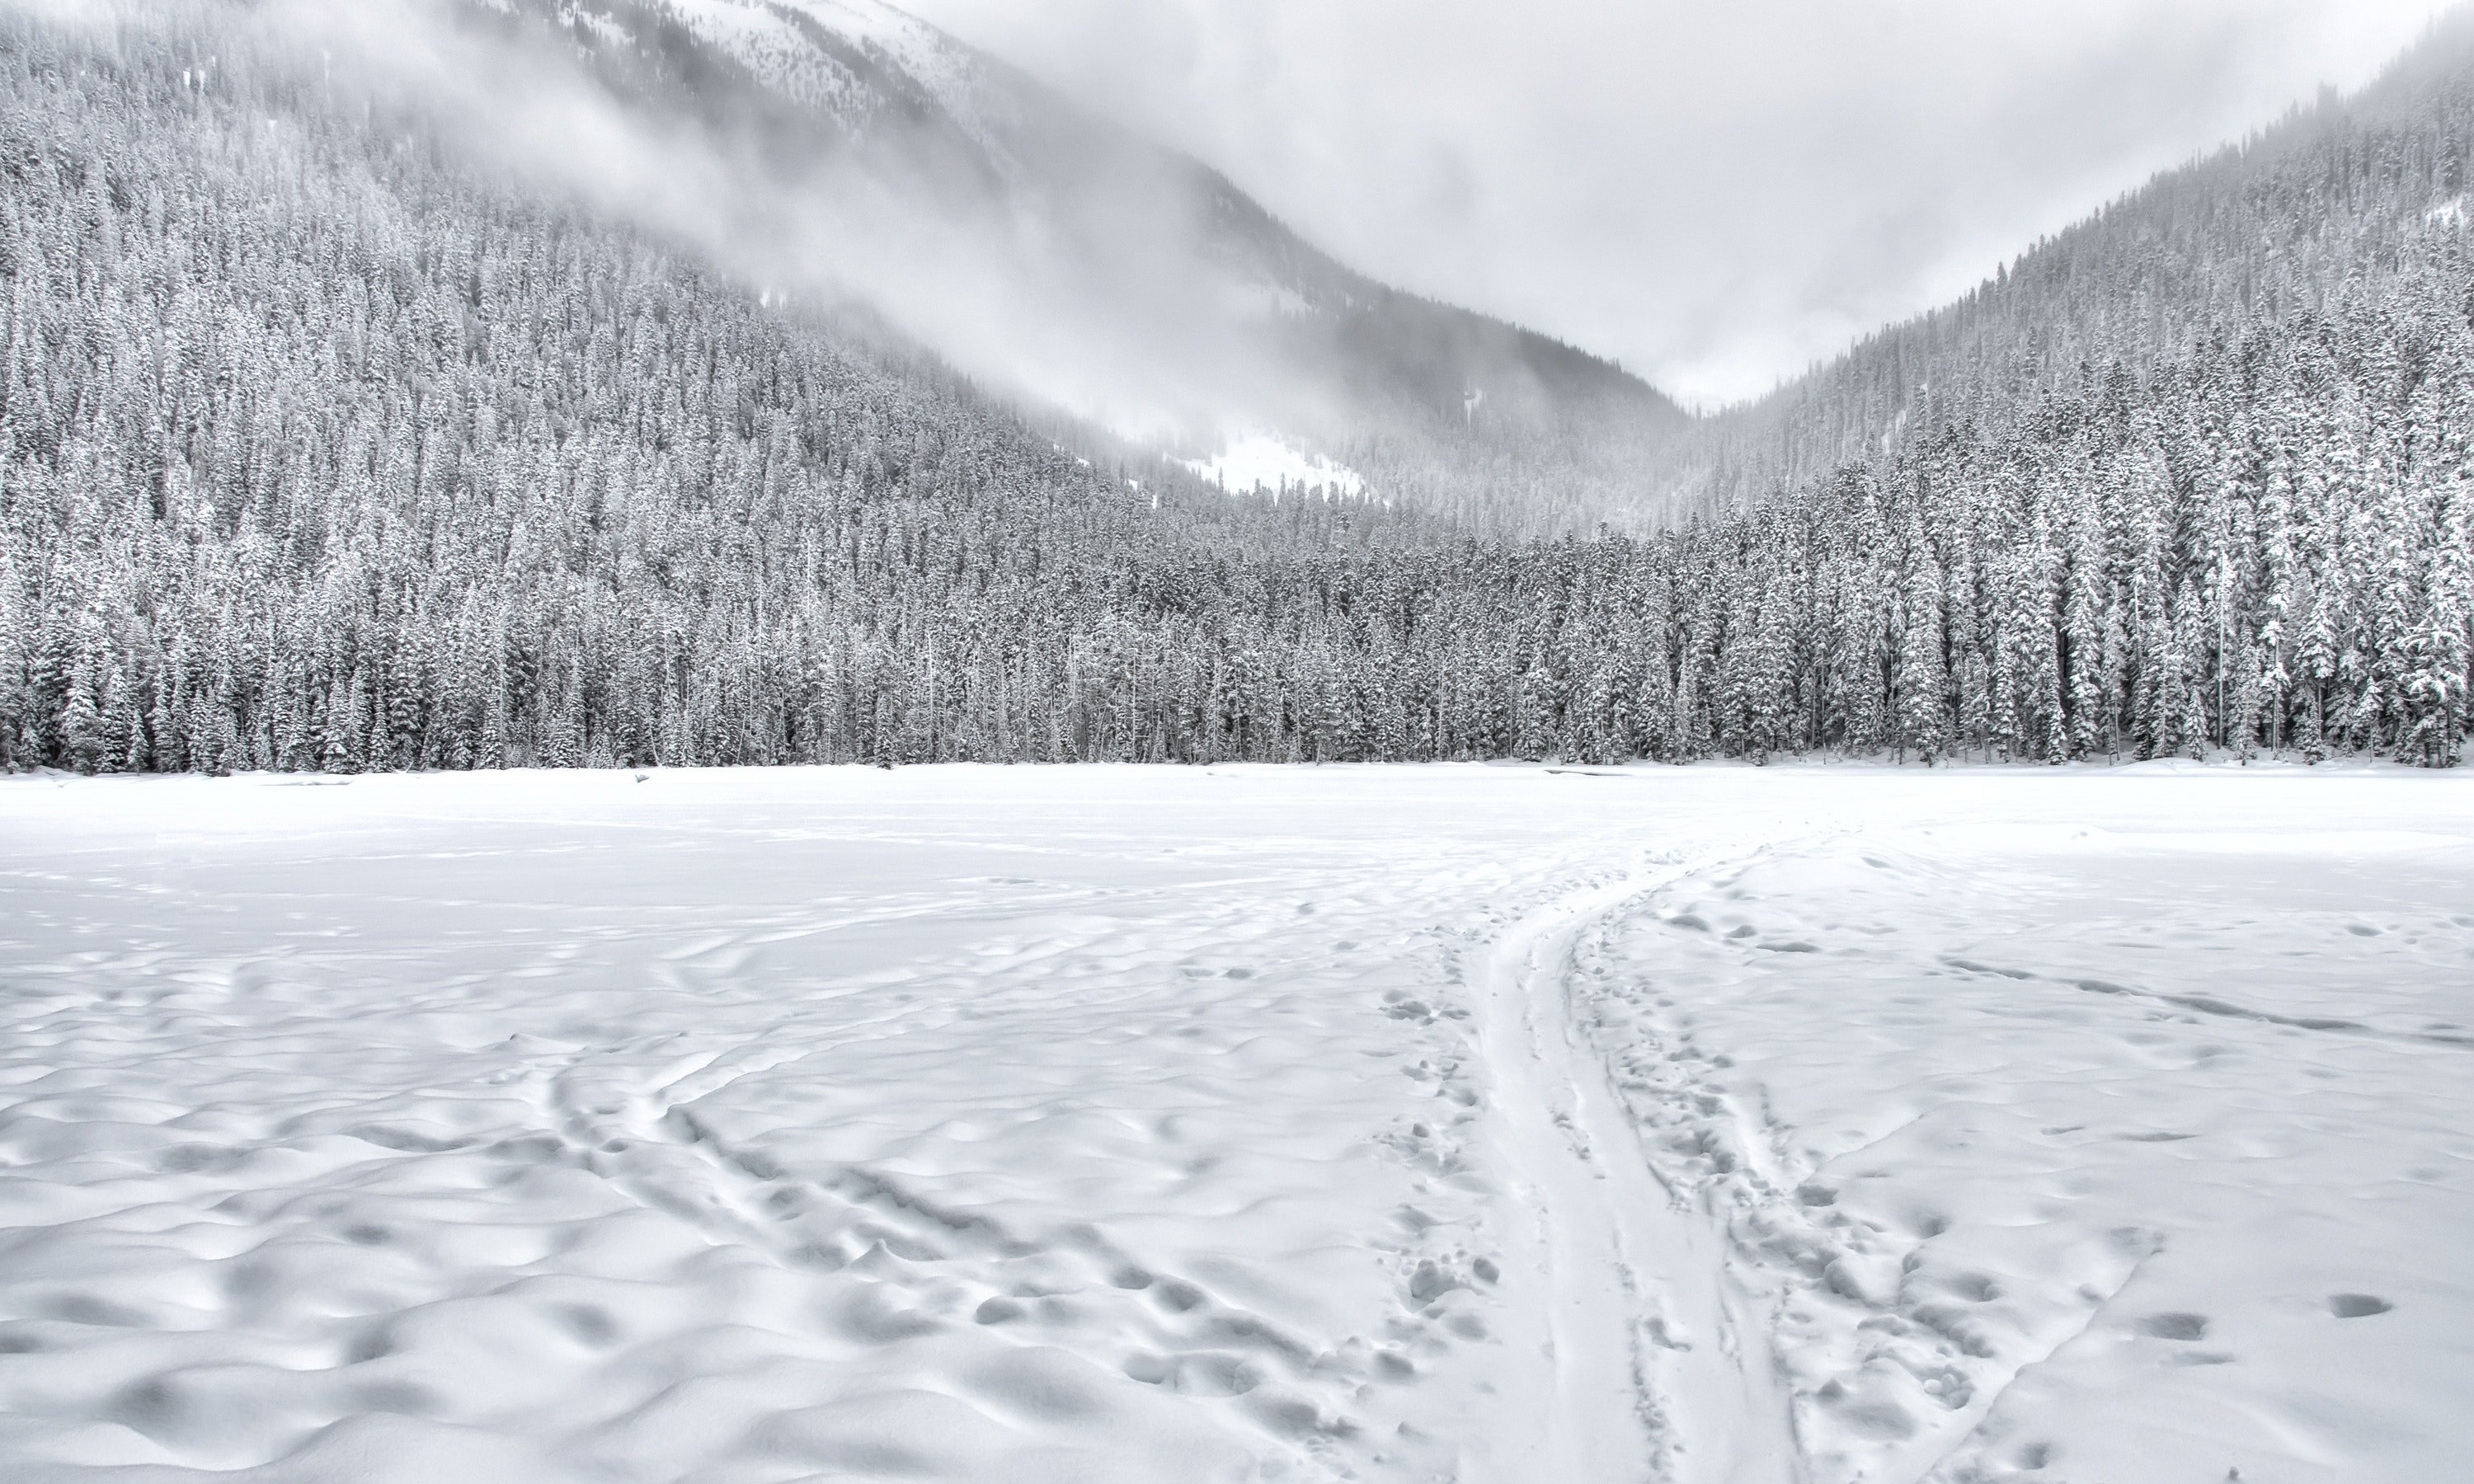 A snowy place. | Source: Pexels